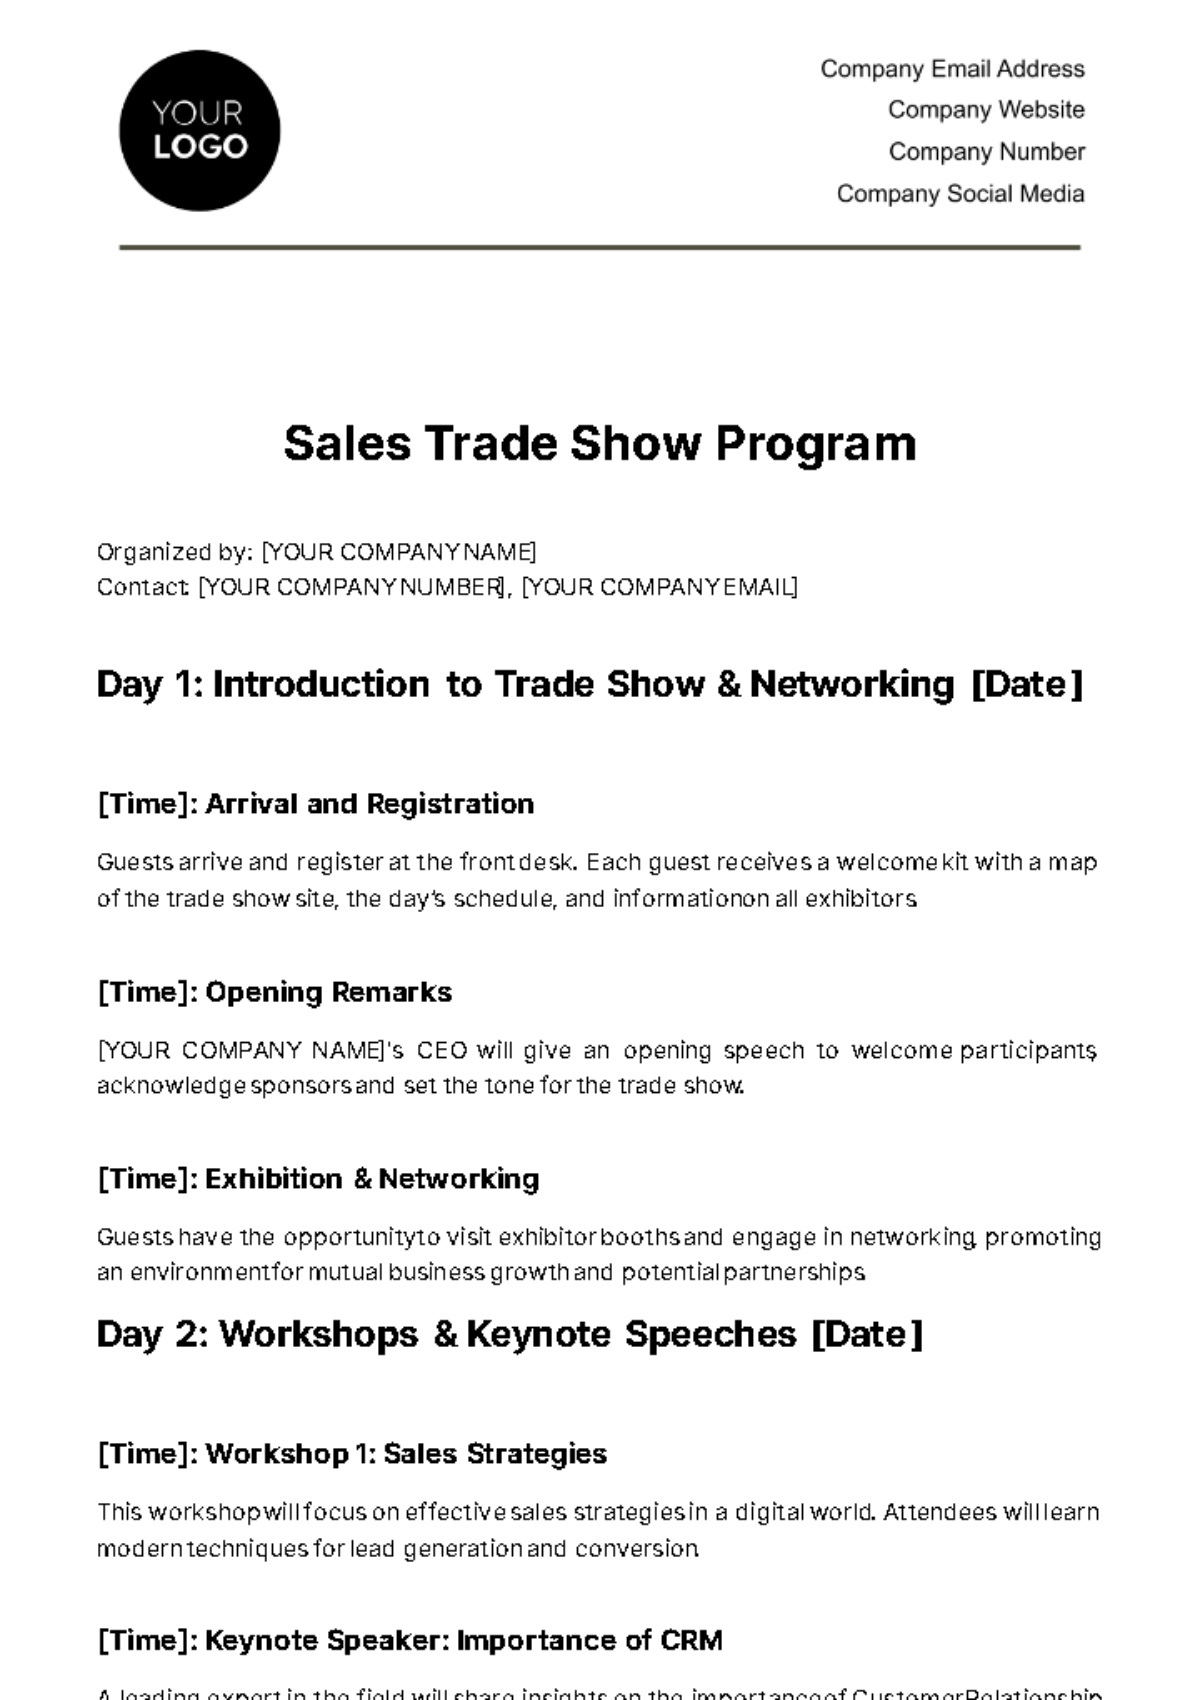 Sales Trade Show Program Template